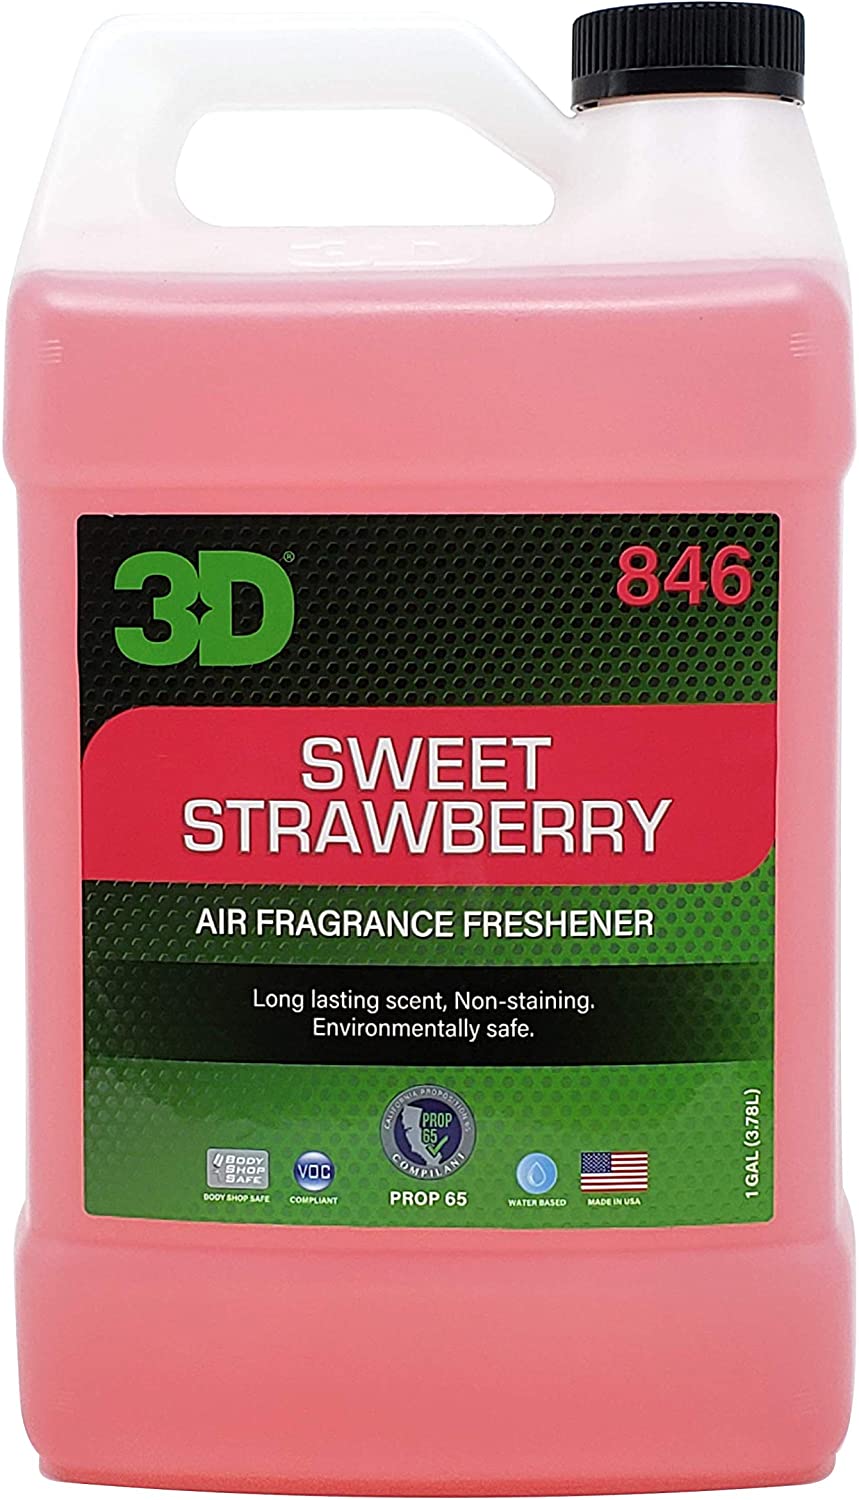 Sweet Strawberry Air Freshener - 3D Car Care